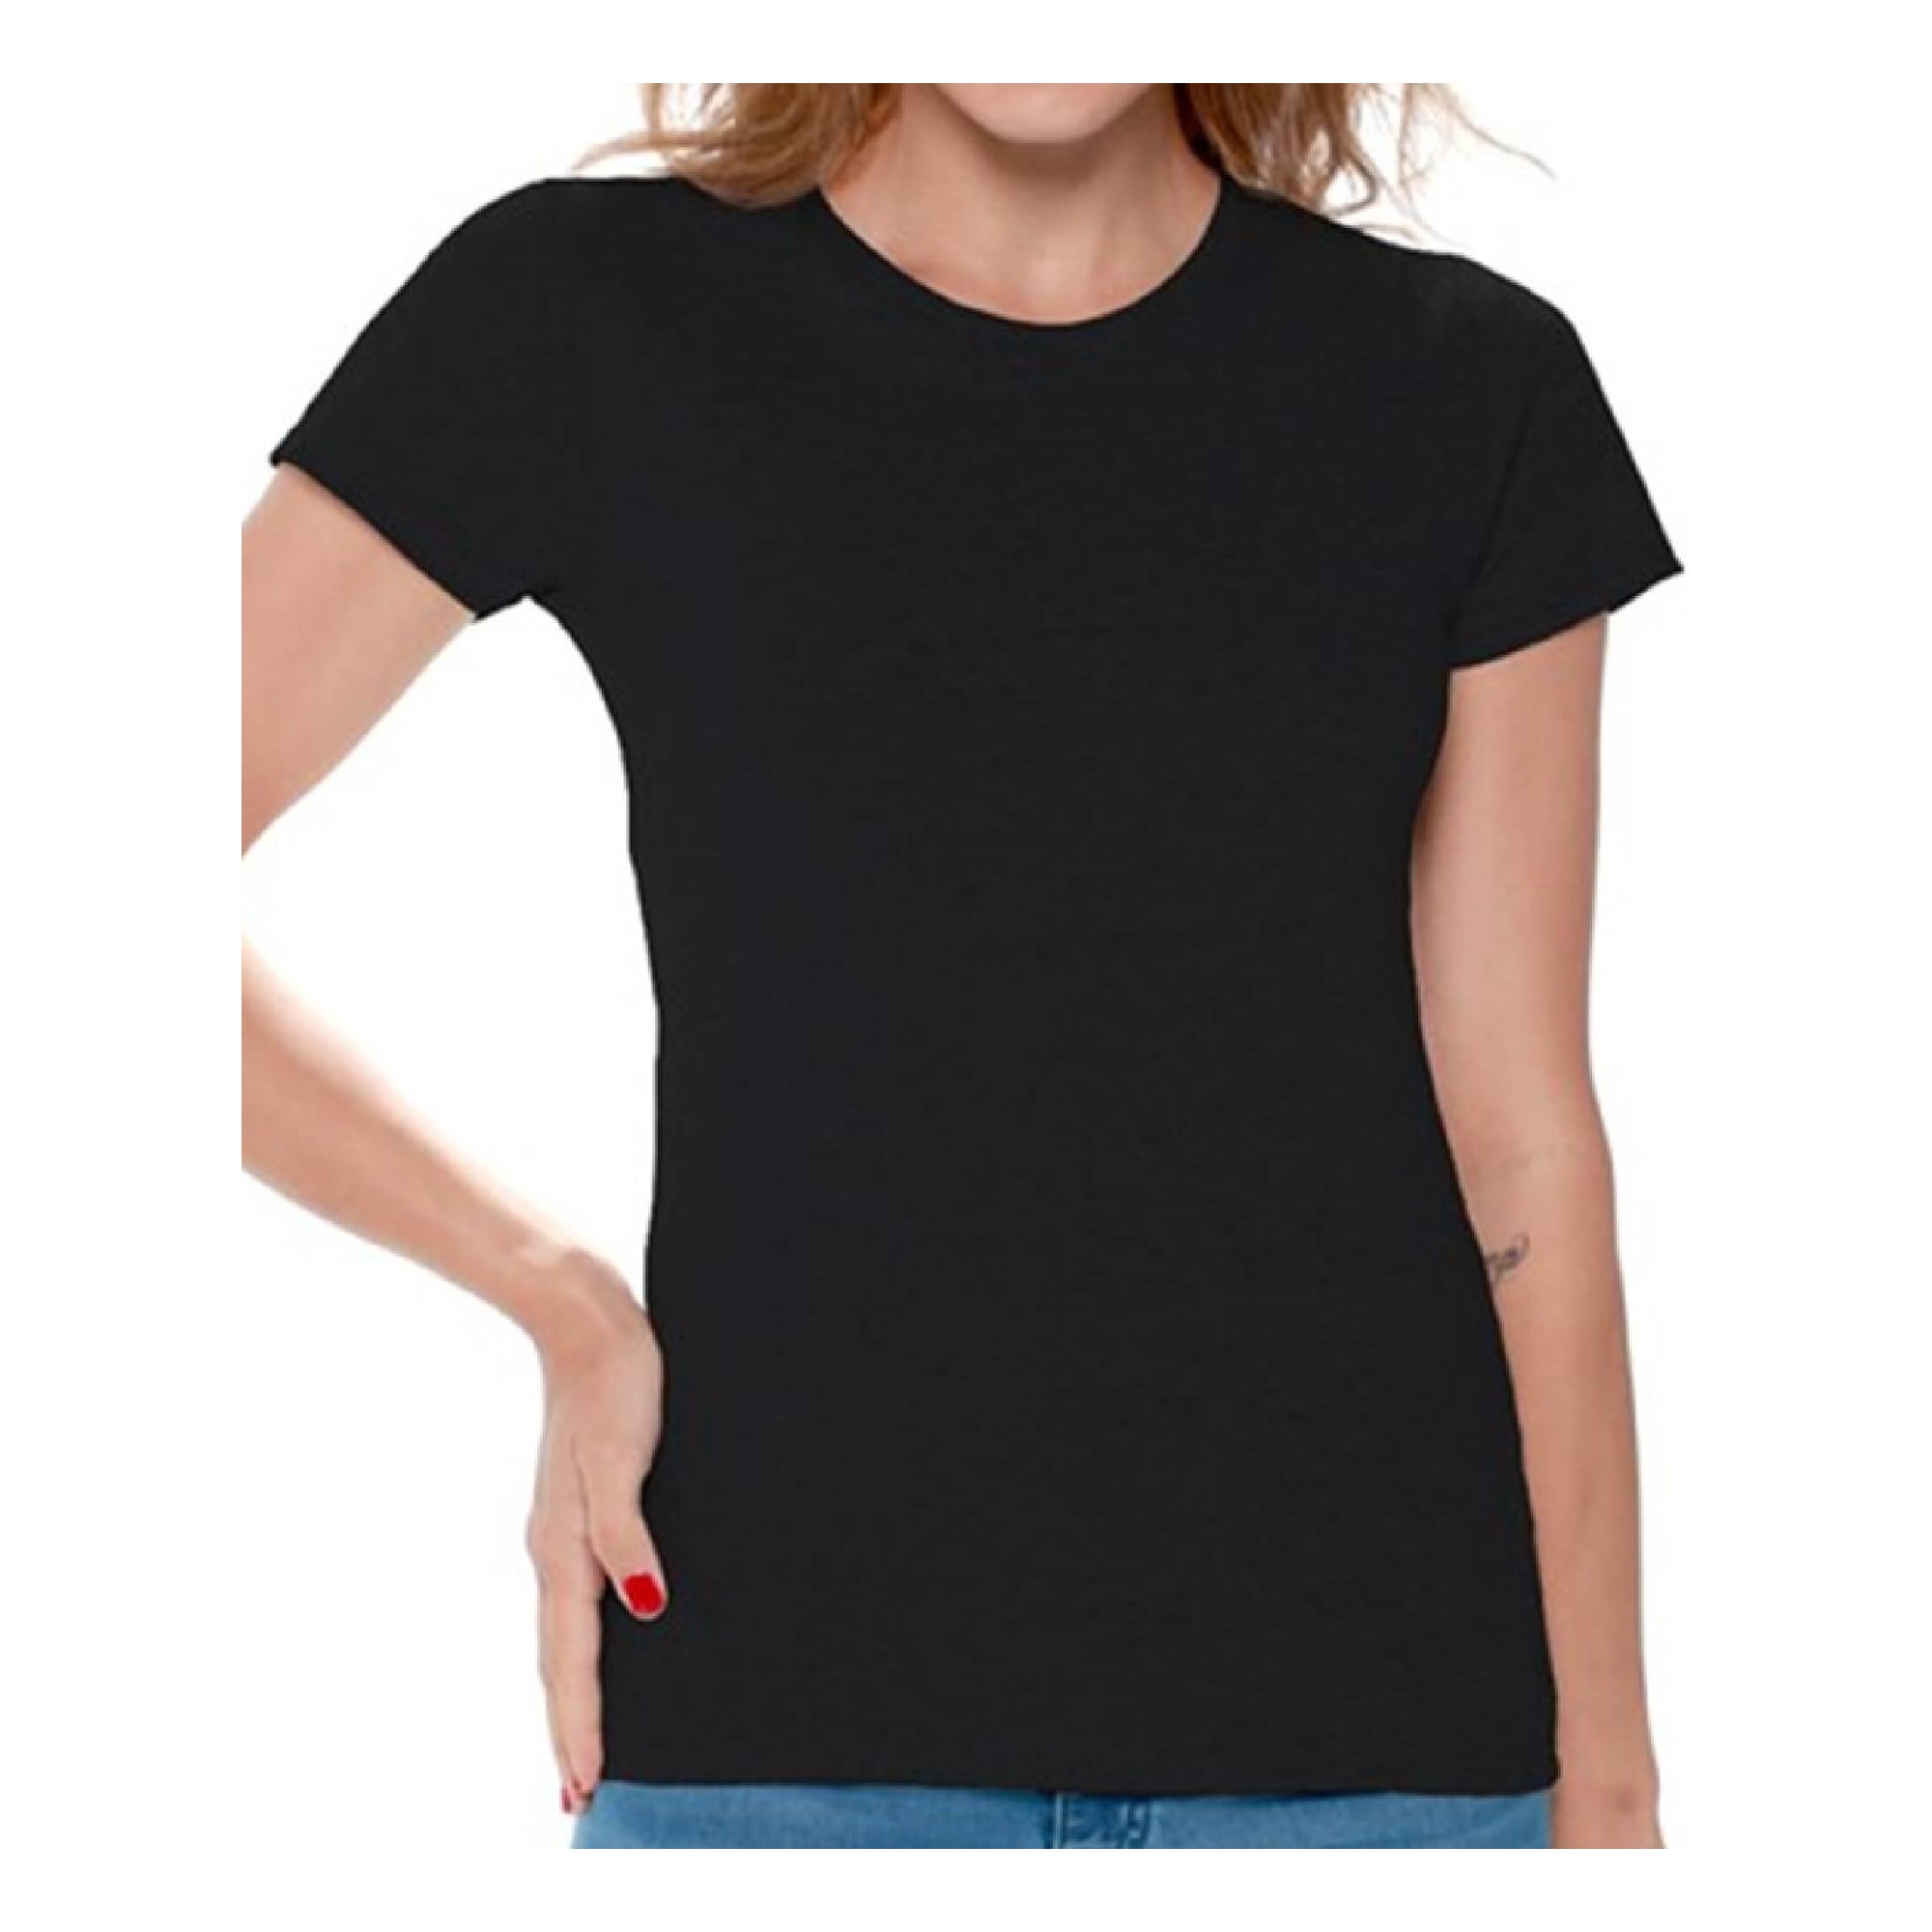 retfærdig faktum hul Gildan Black Women T-Shirts Value Pack Shirts for Women - Single OR Pack of  6 OR Pack of 12 Black Shirts for Women Gildan T-shirts for Women Black T- shirt Casual Shirt Basic